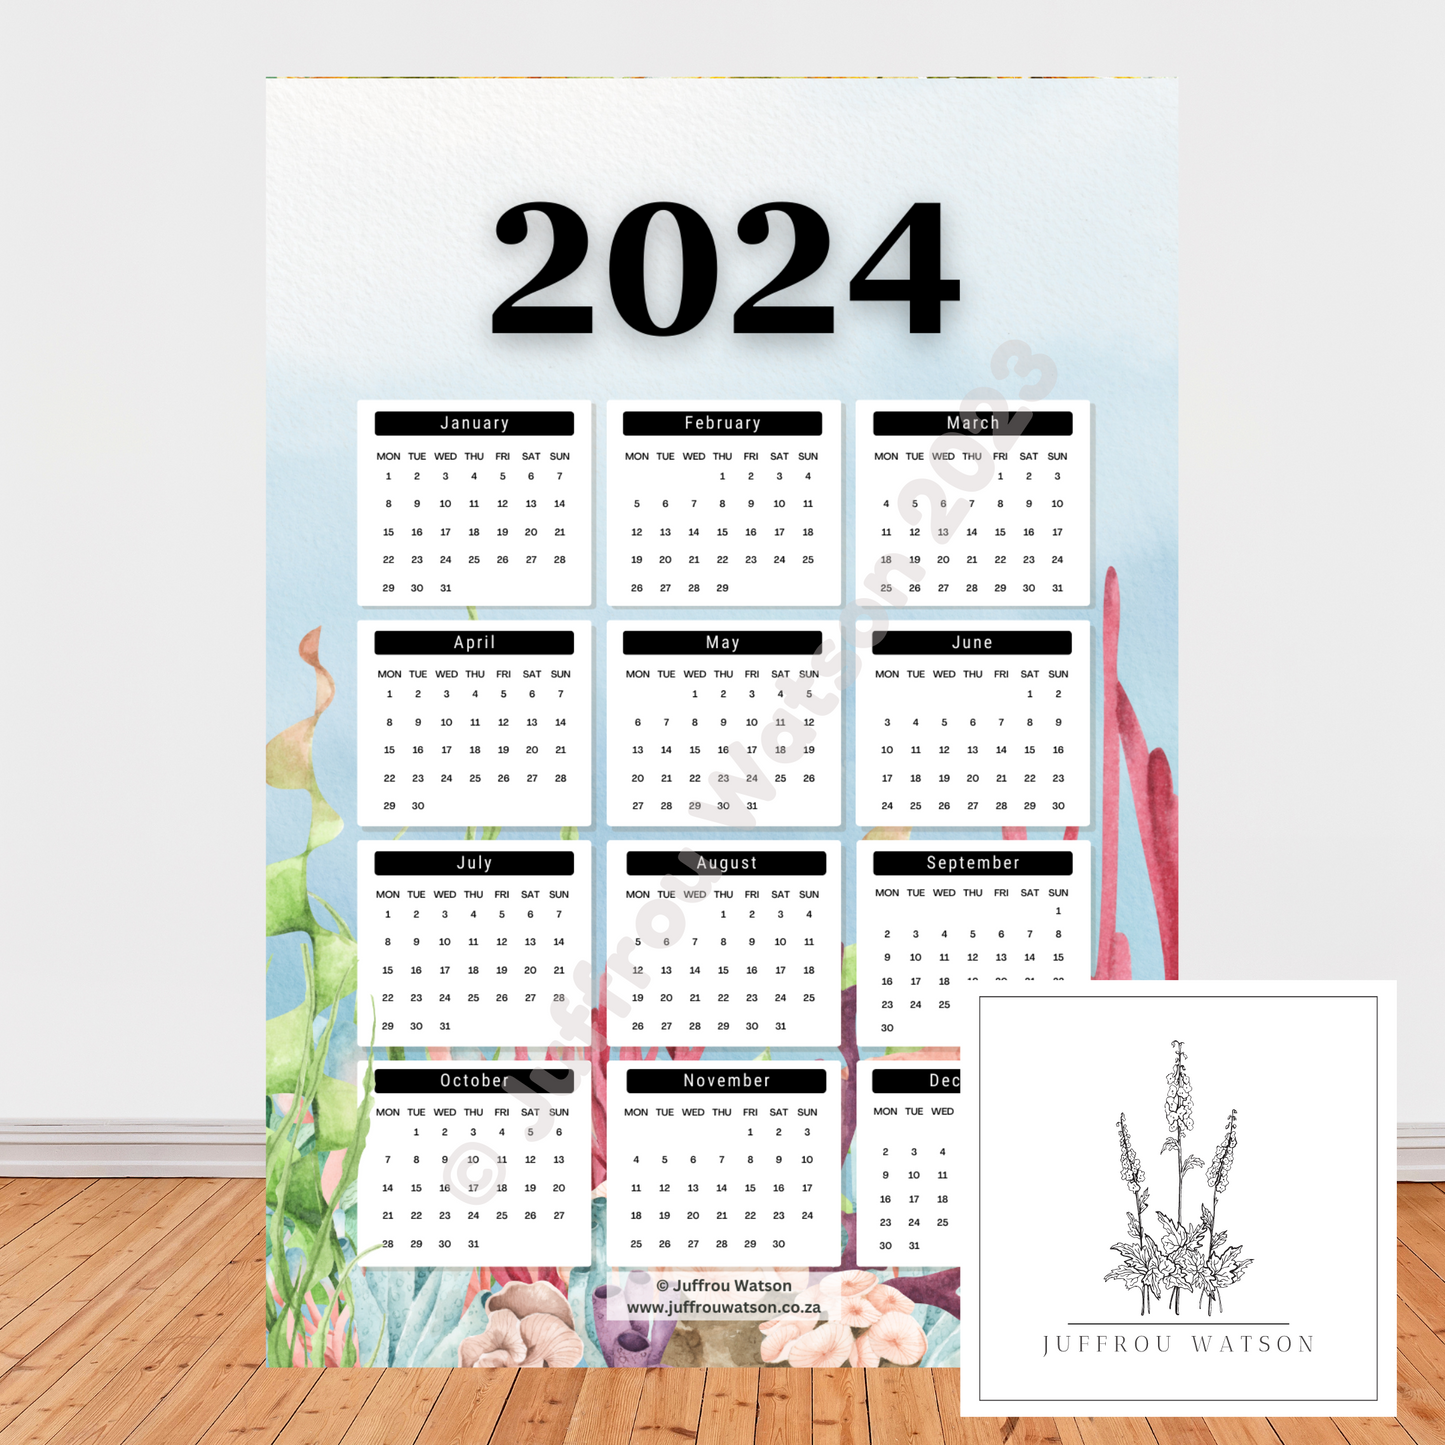 2024 Wall Calendar - Under the Sea